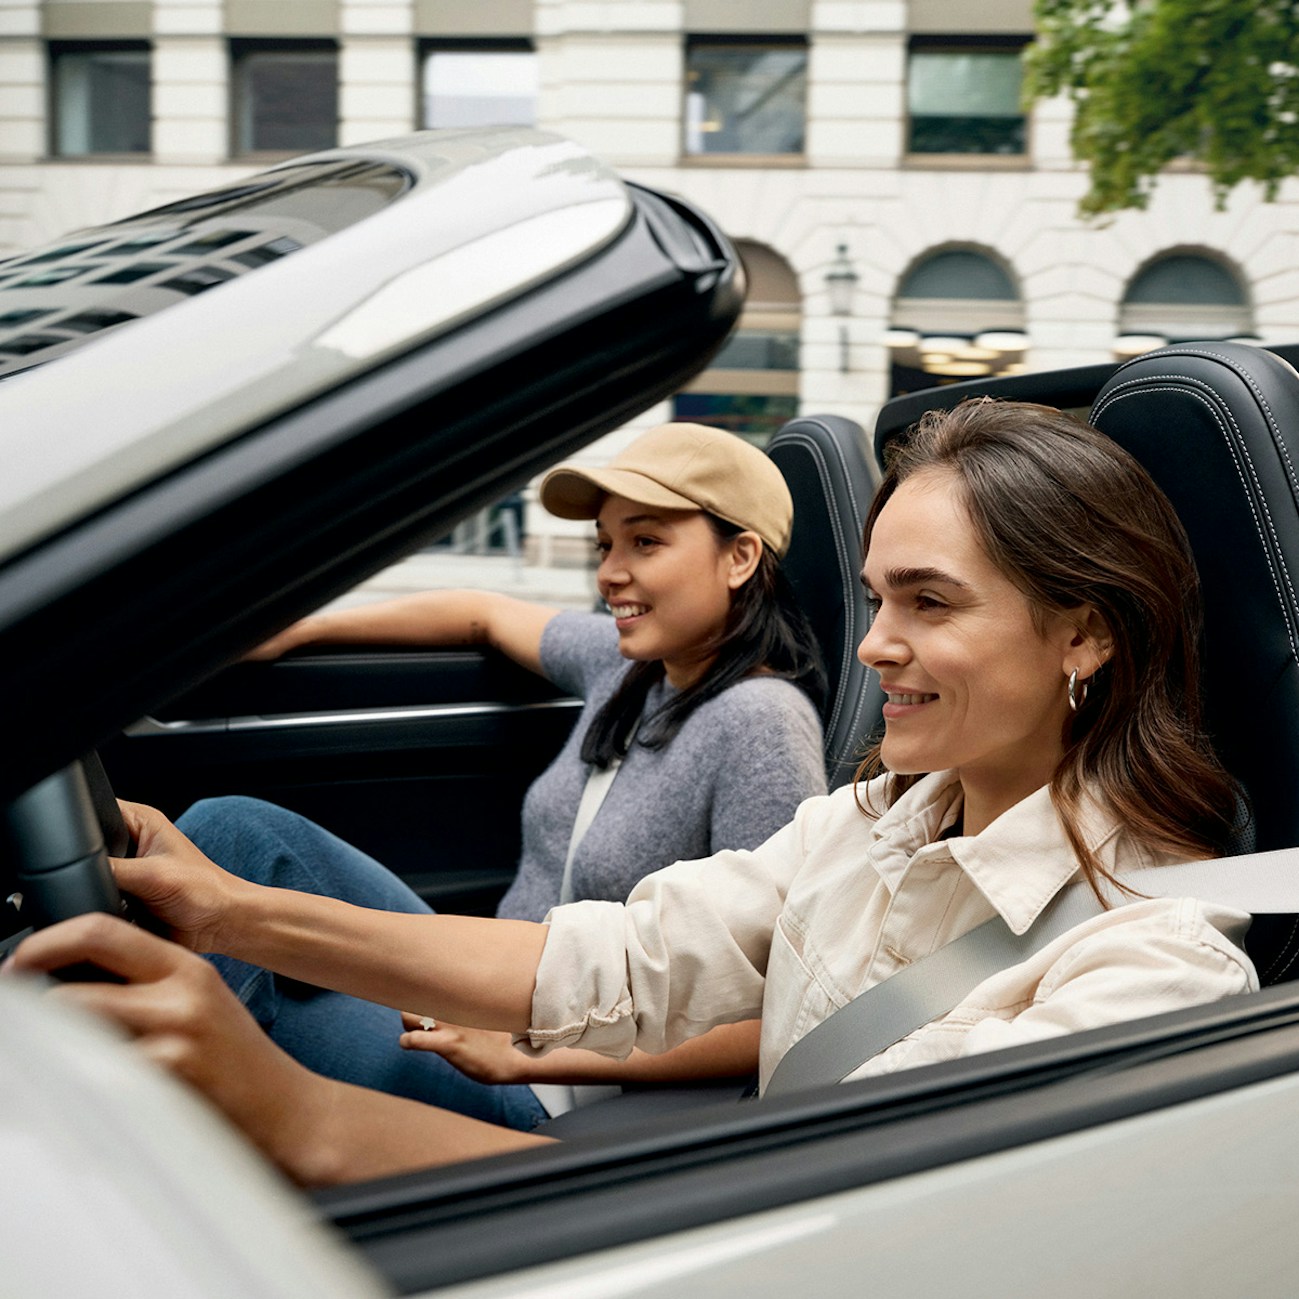 Two smiling young women driving a Porsche car on an urban street.